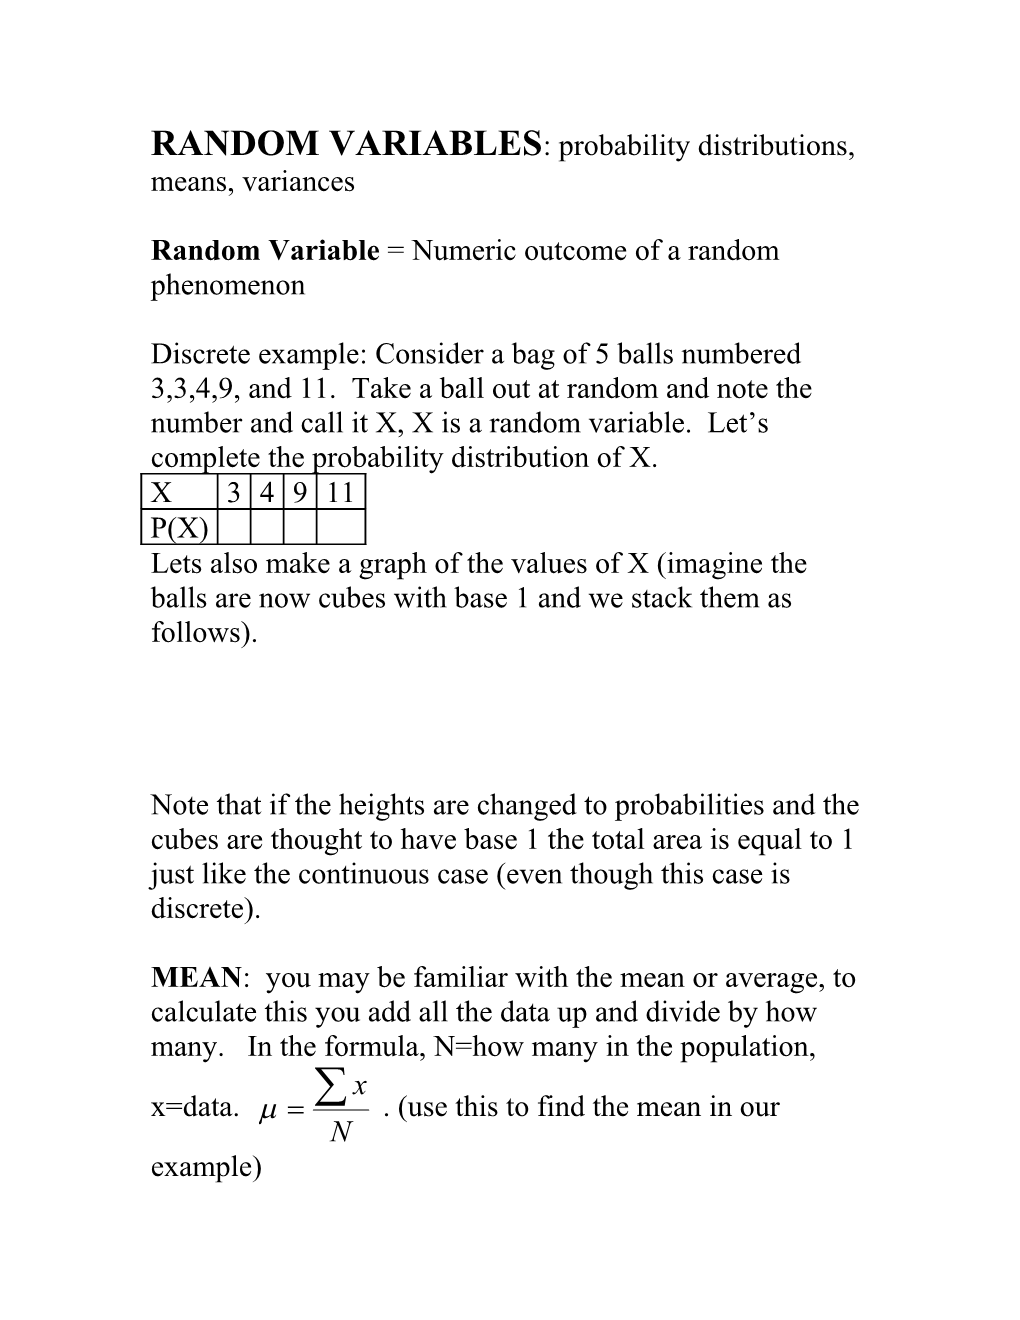 RANDOM VARIABLES: Probability Distributions, Means, Variances